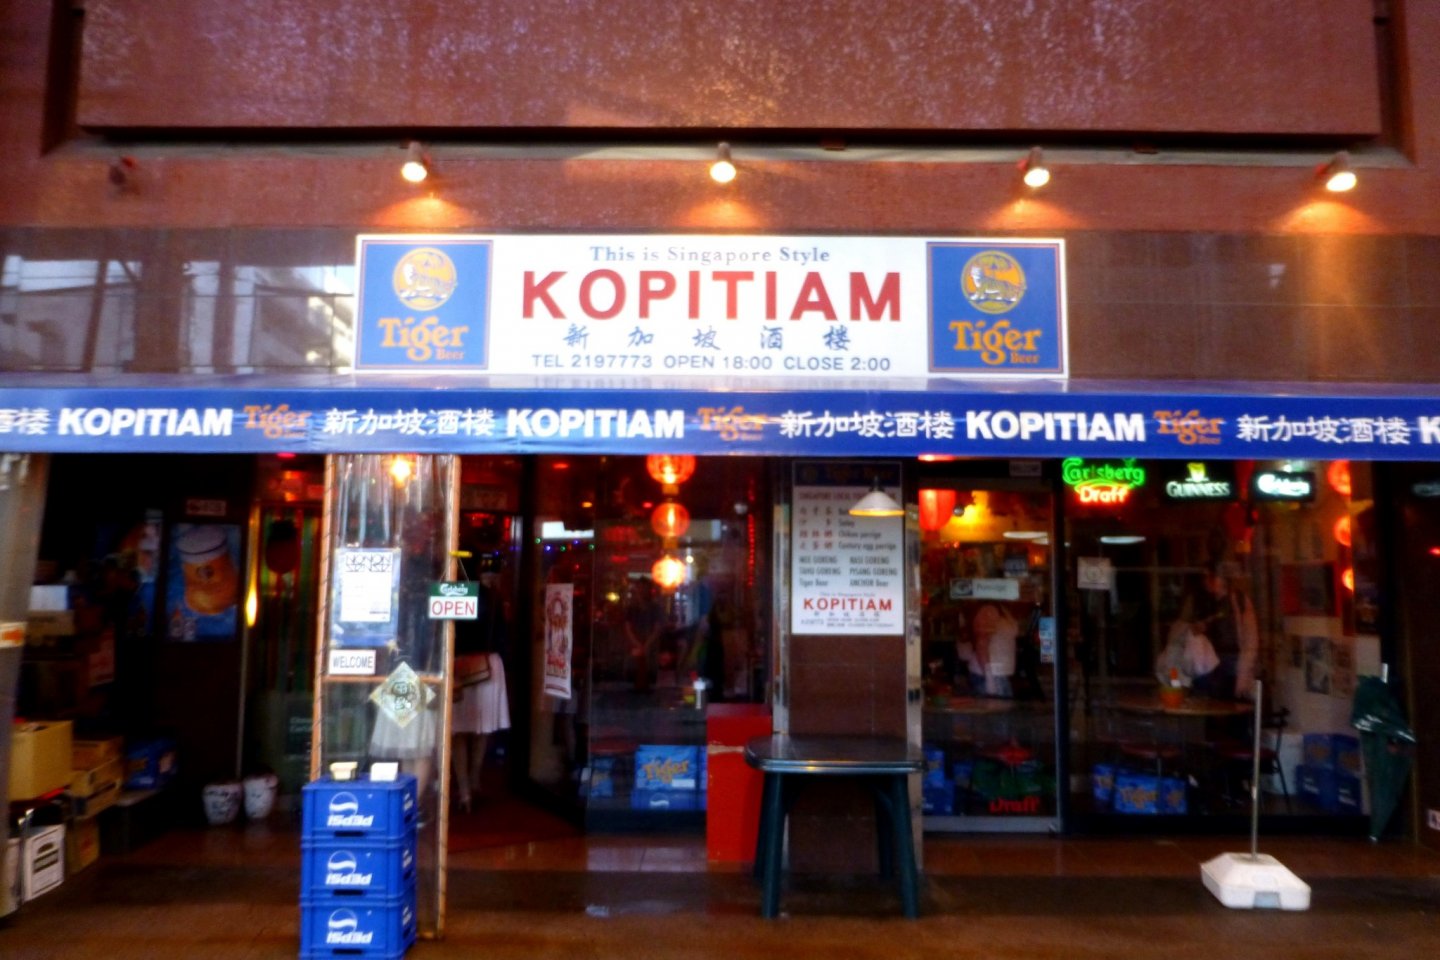 Singapore Kopitiam's storefront 